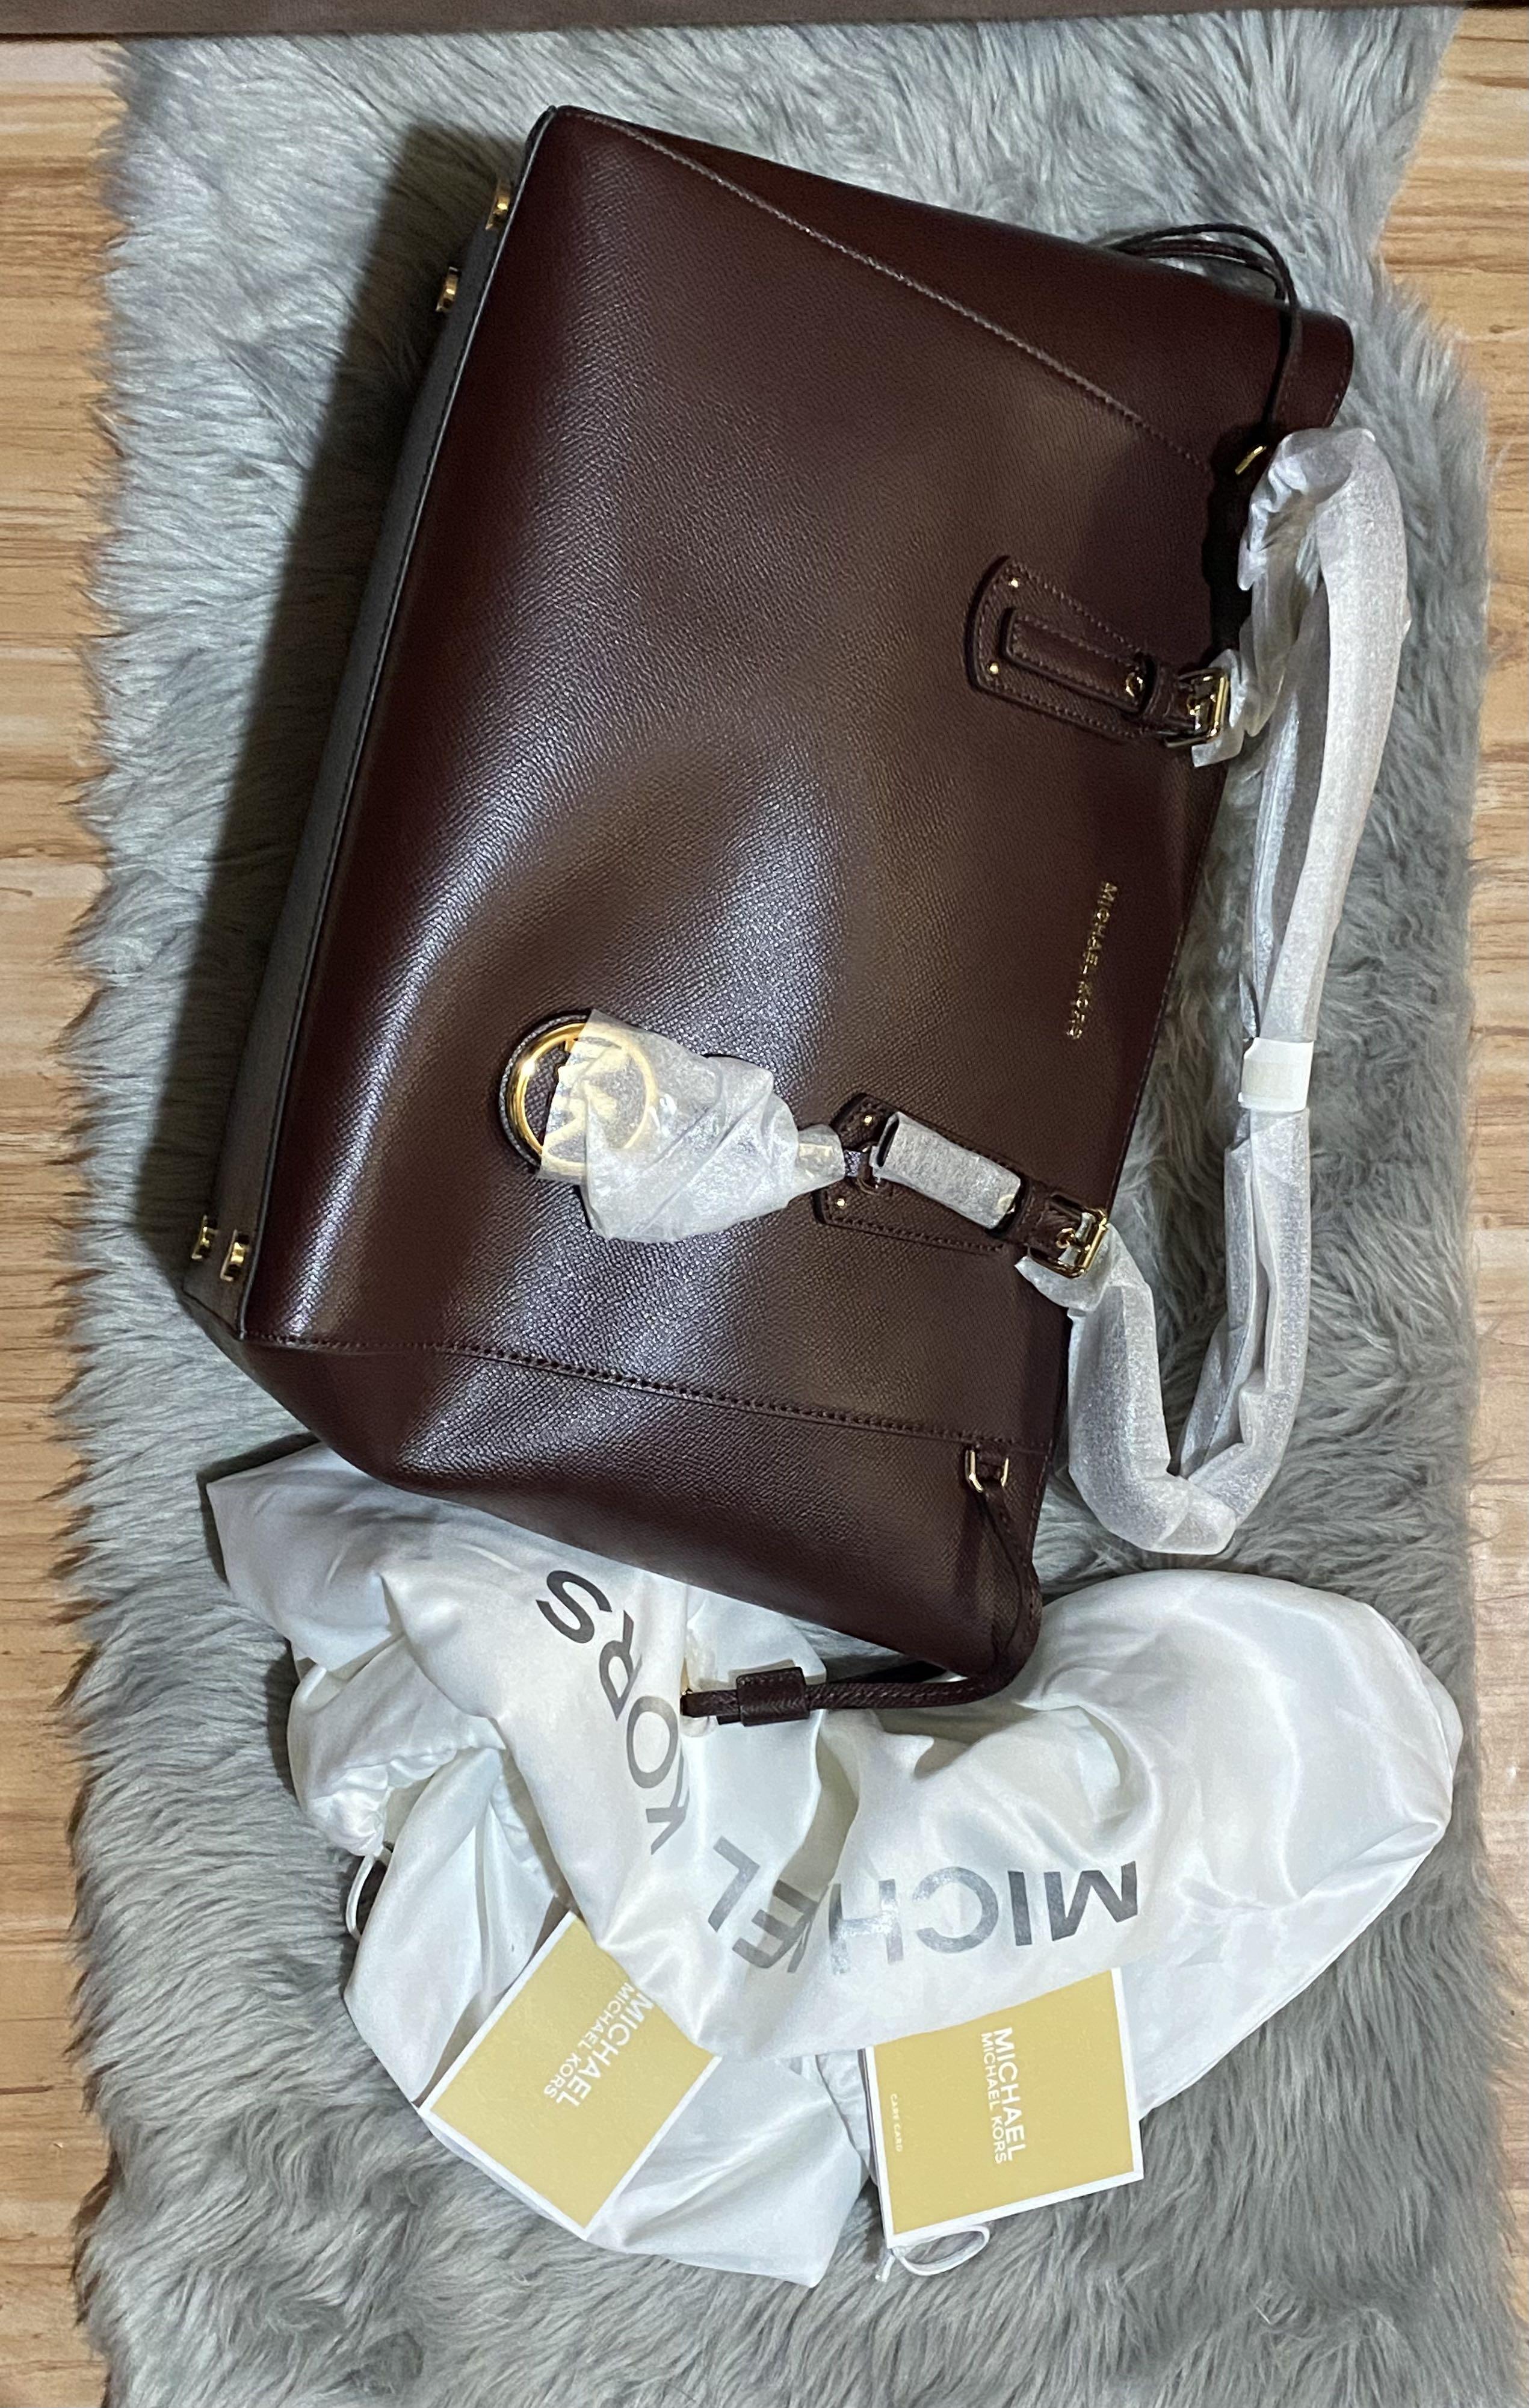 Michael Kors Jet Set Large Saffiano Leather Crossbody Bag- Barolo